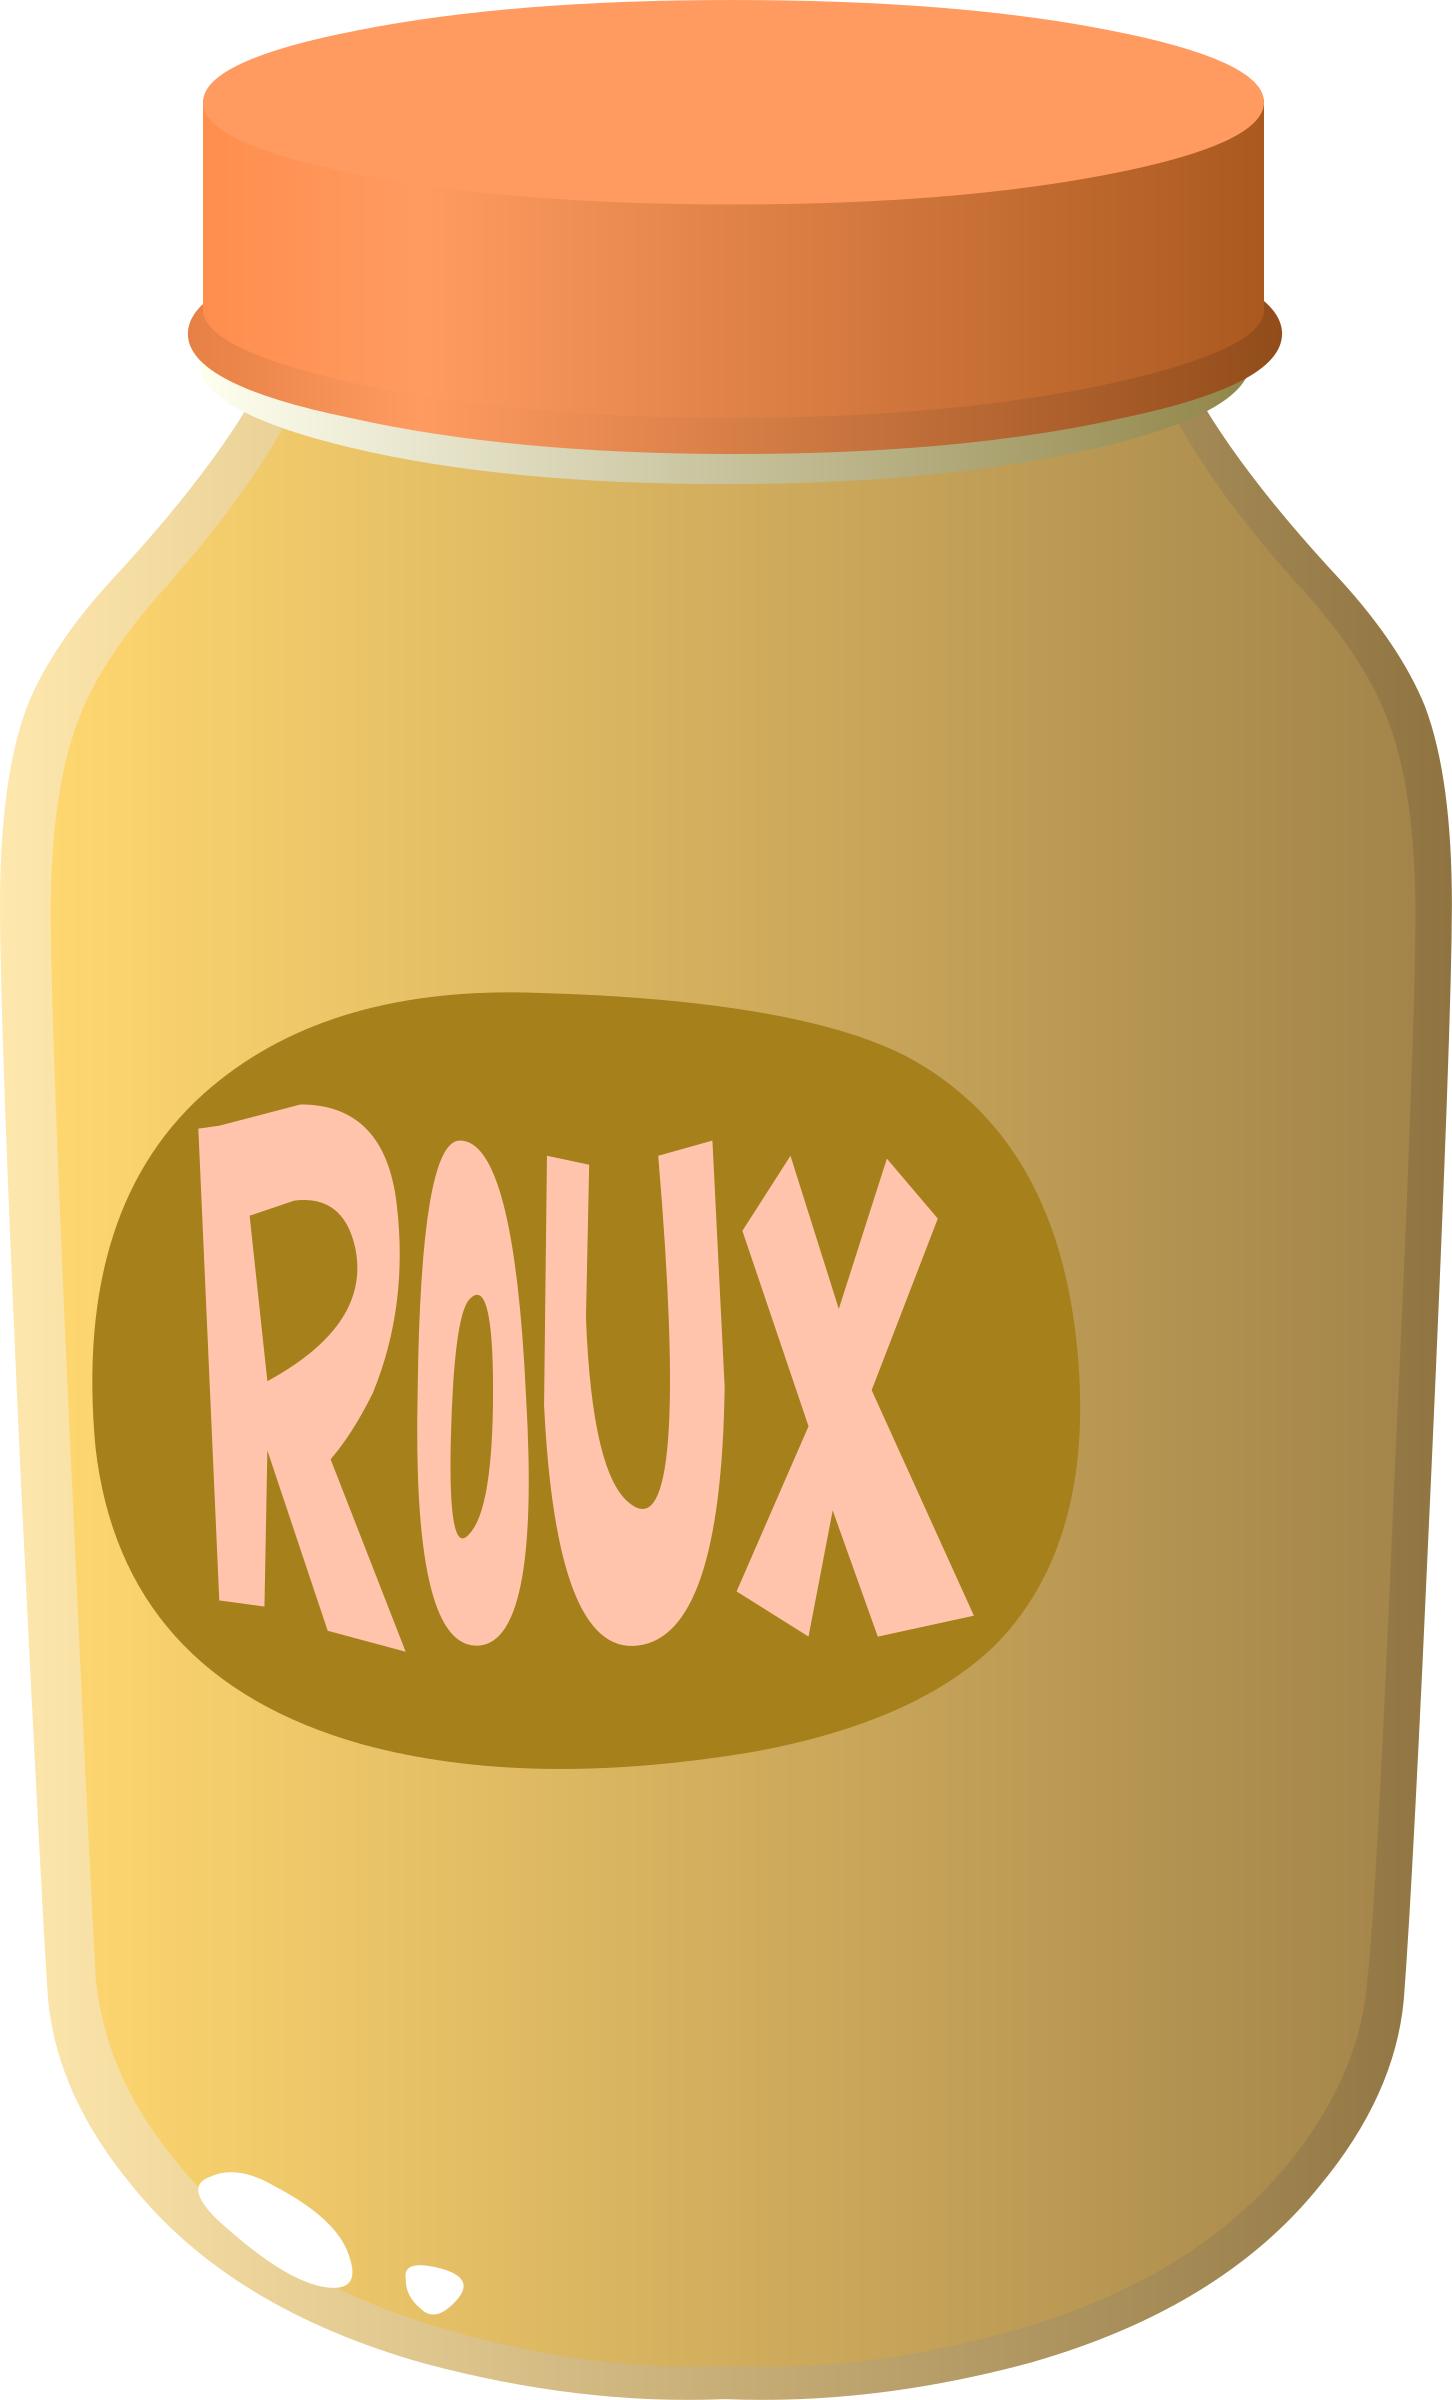 Food Roux icons